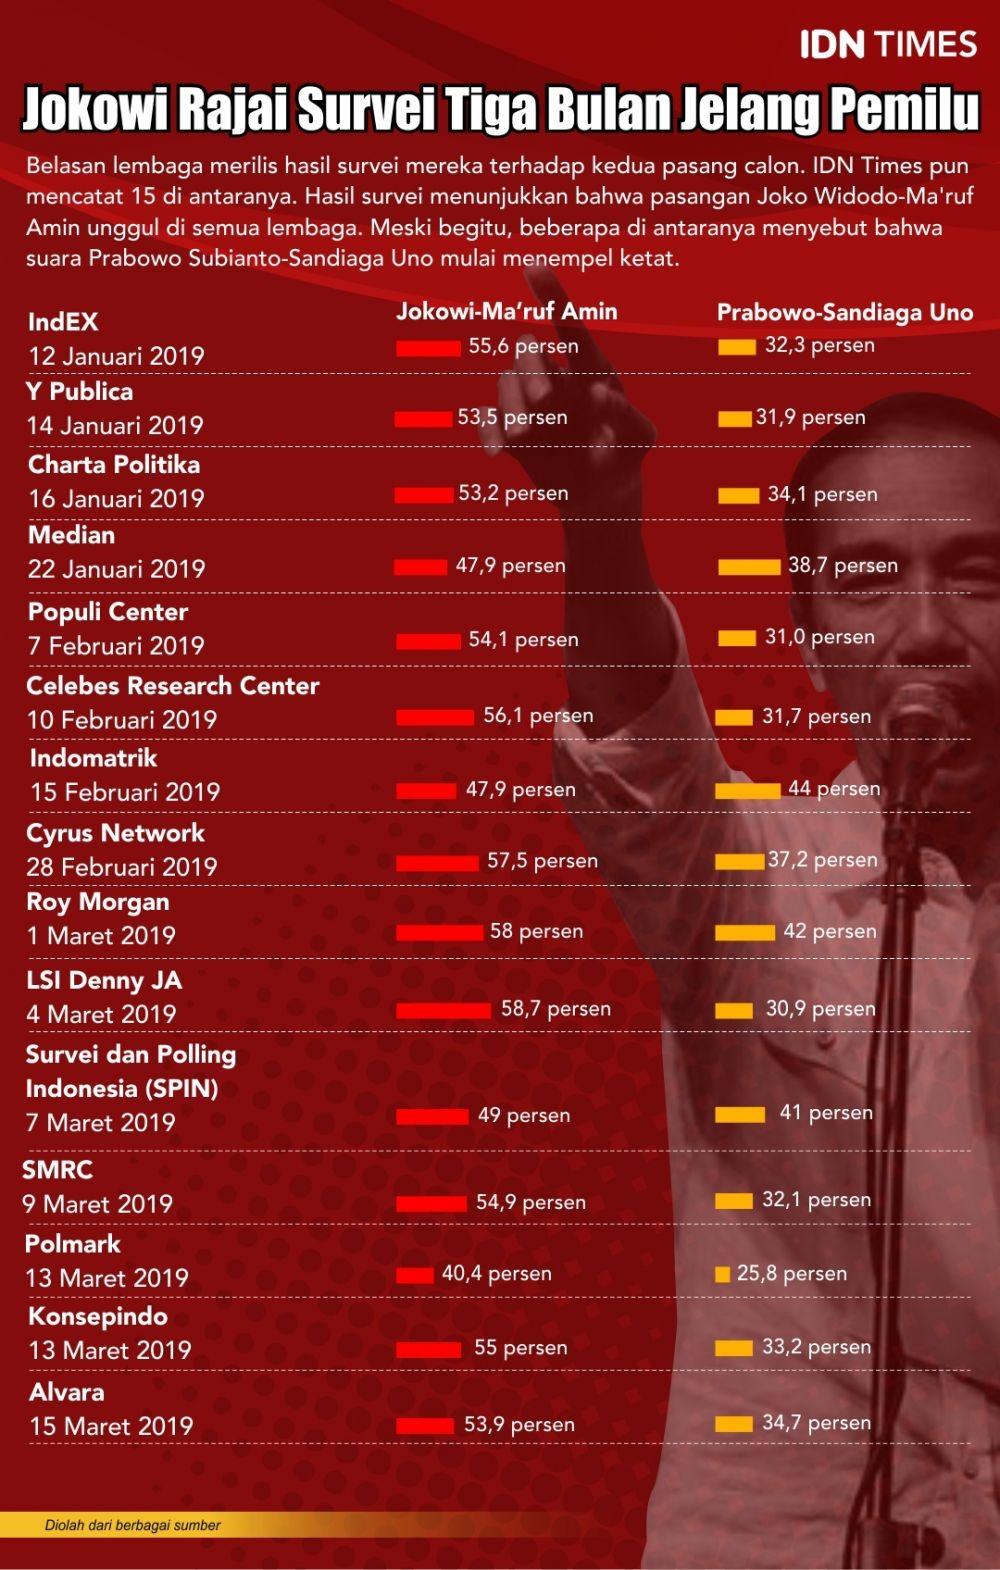 Jokowi Kalah di Lebak, Bukti Dukungan Keluarga Ratu Atut Tak Berefek?